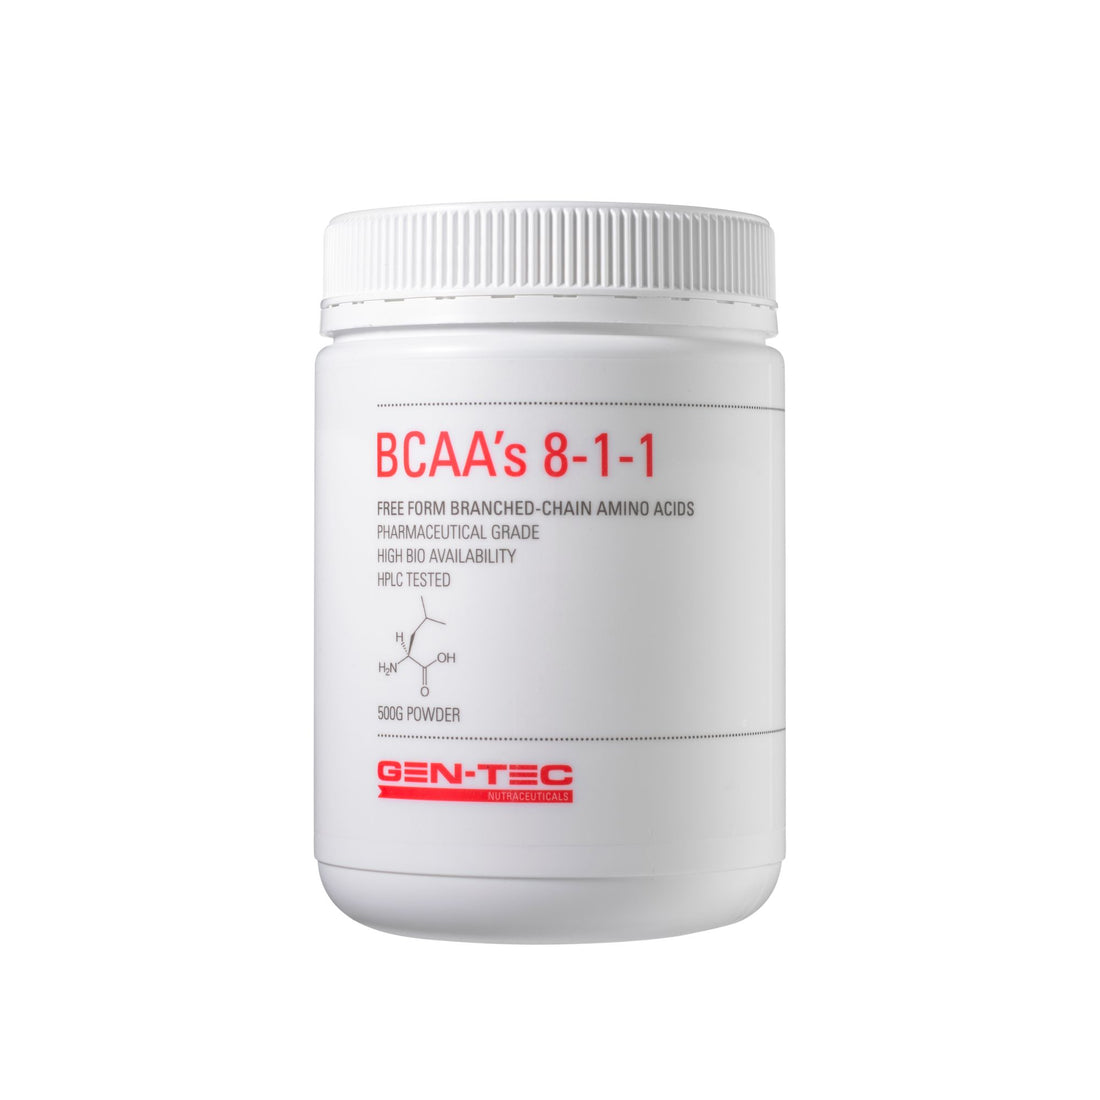 Gentec BCAAs 8-1-1 Nutraceuticals